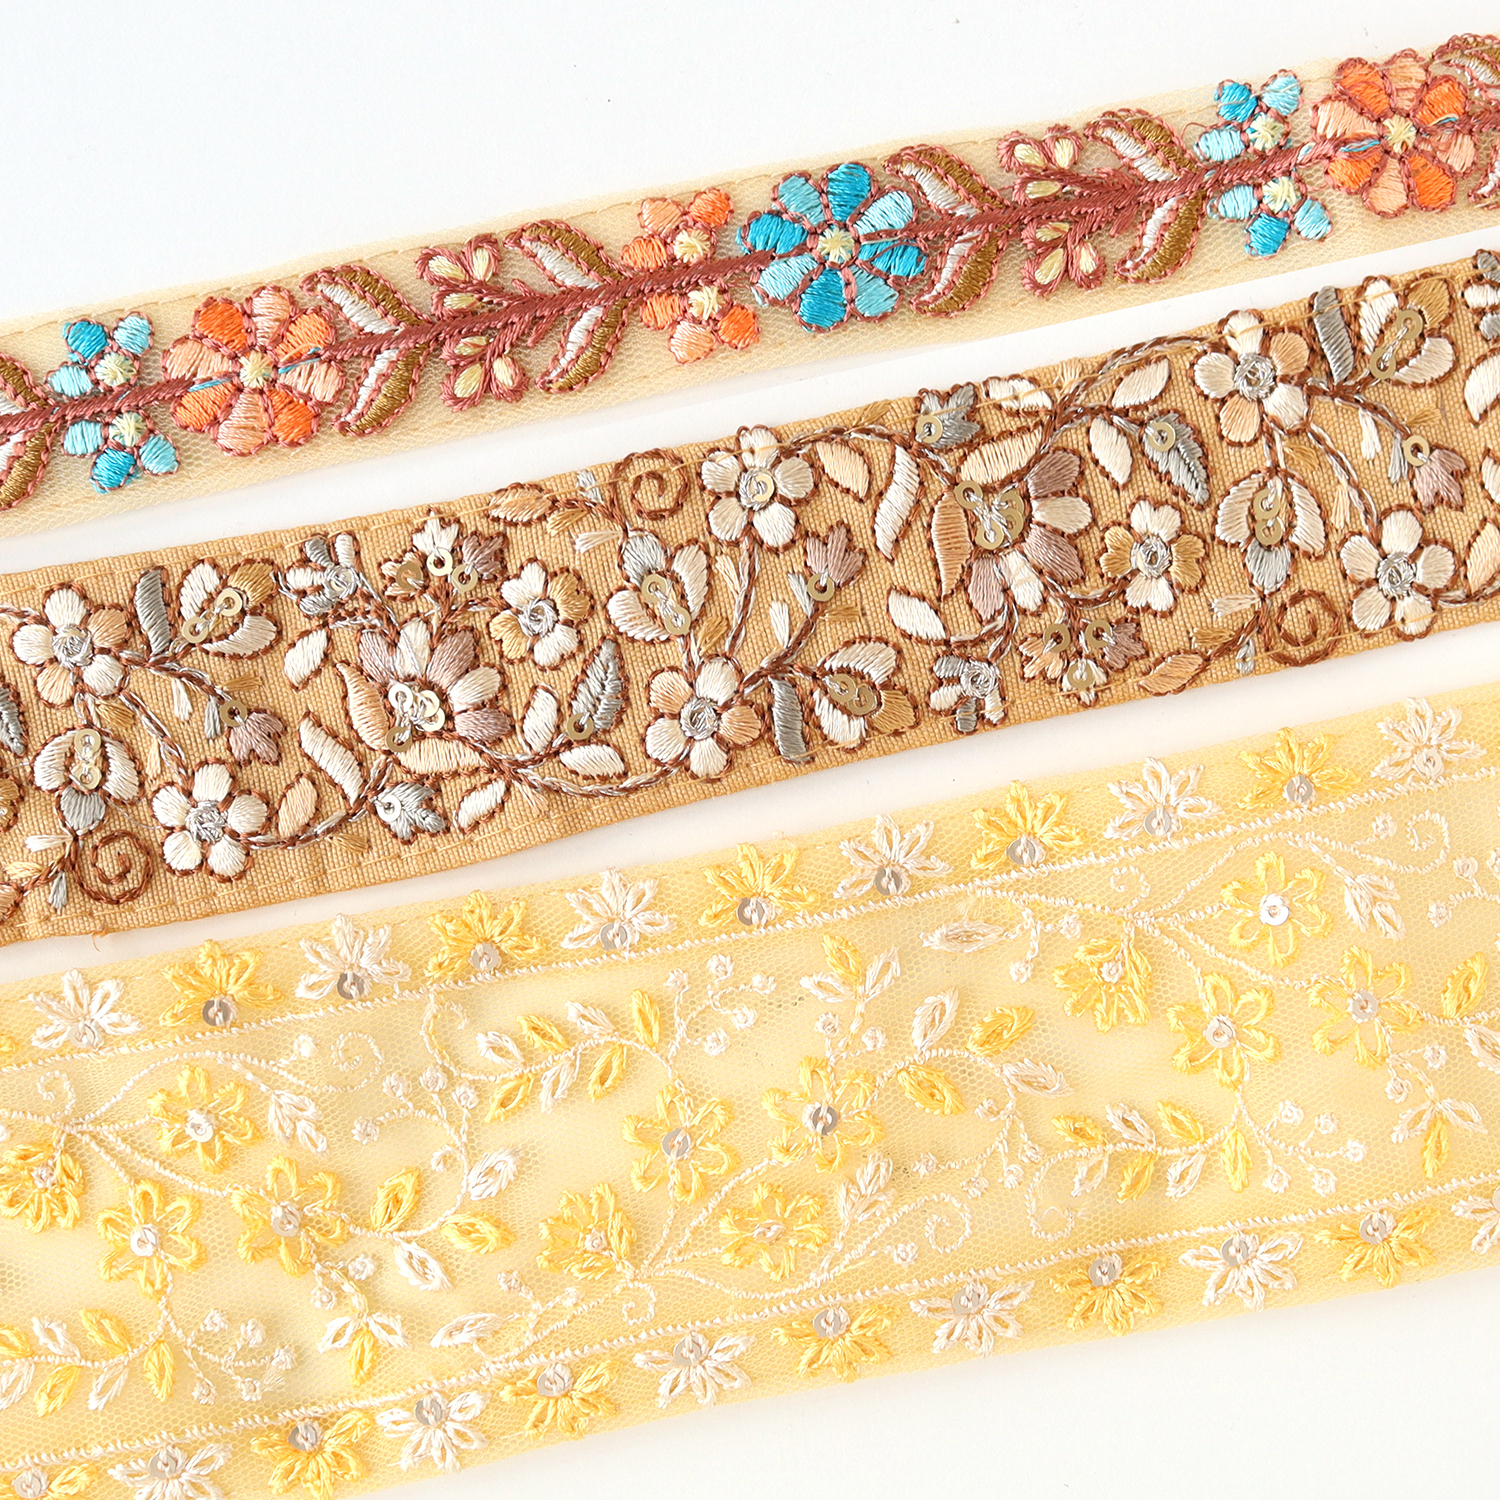 KF-RMIX-77 Indian embroidery ribbon, approx. 30cm x 3pcs (bag)